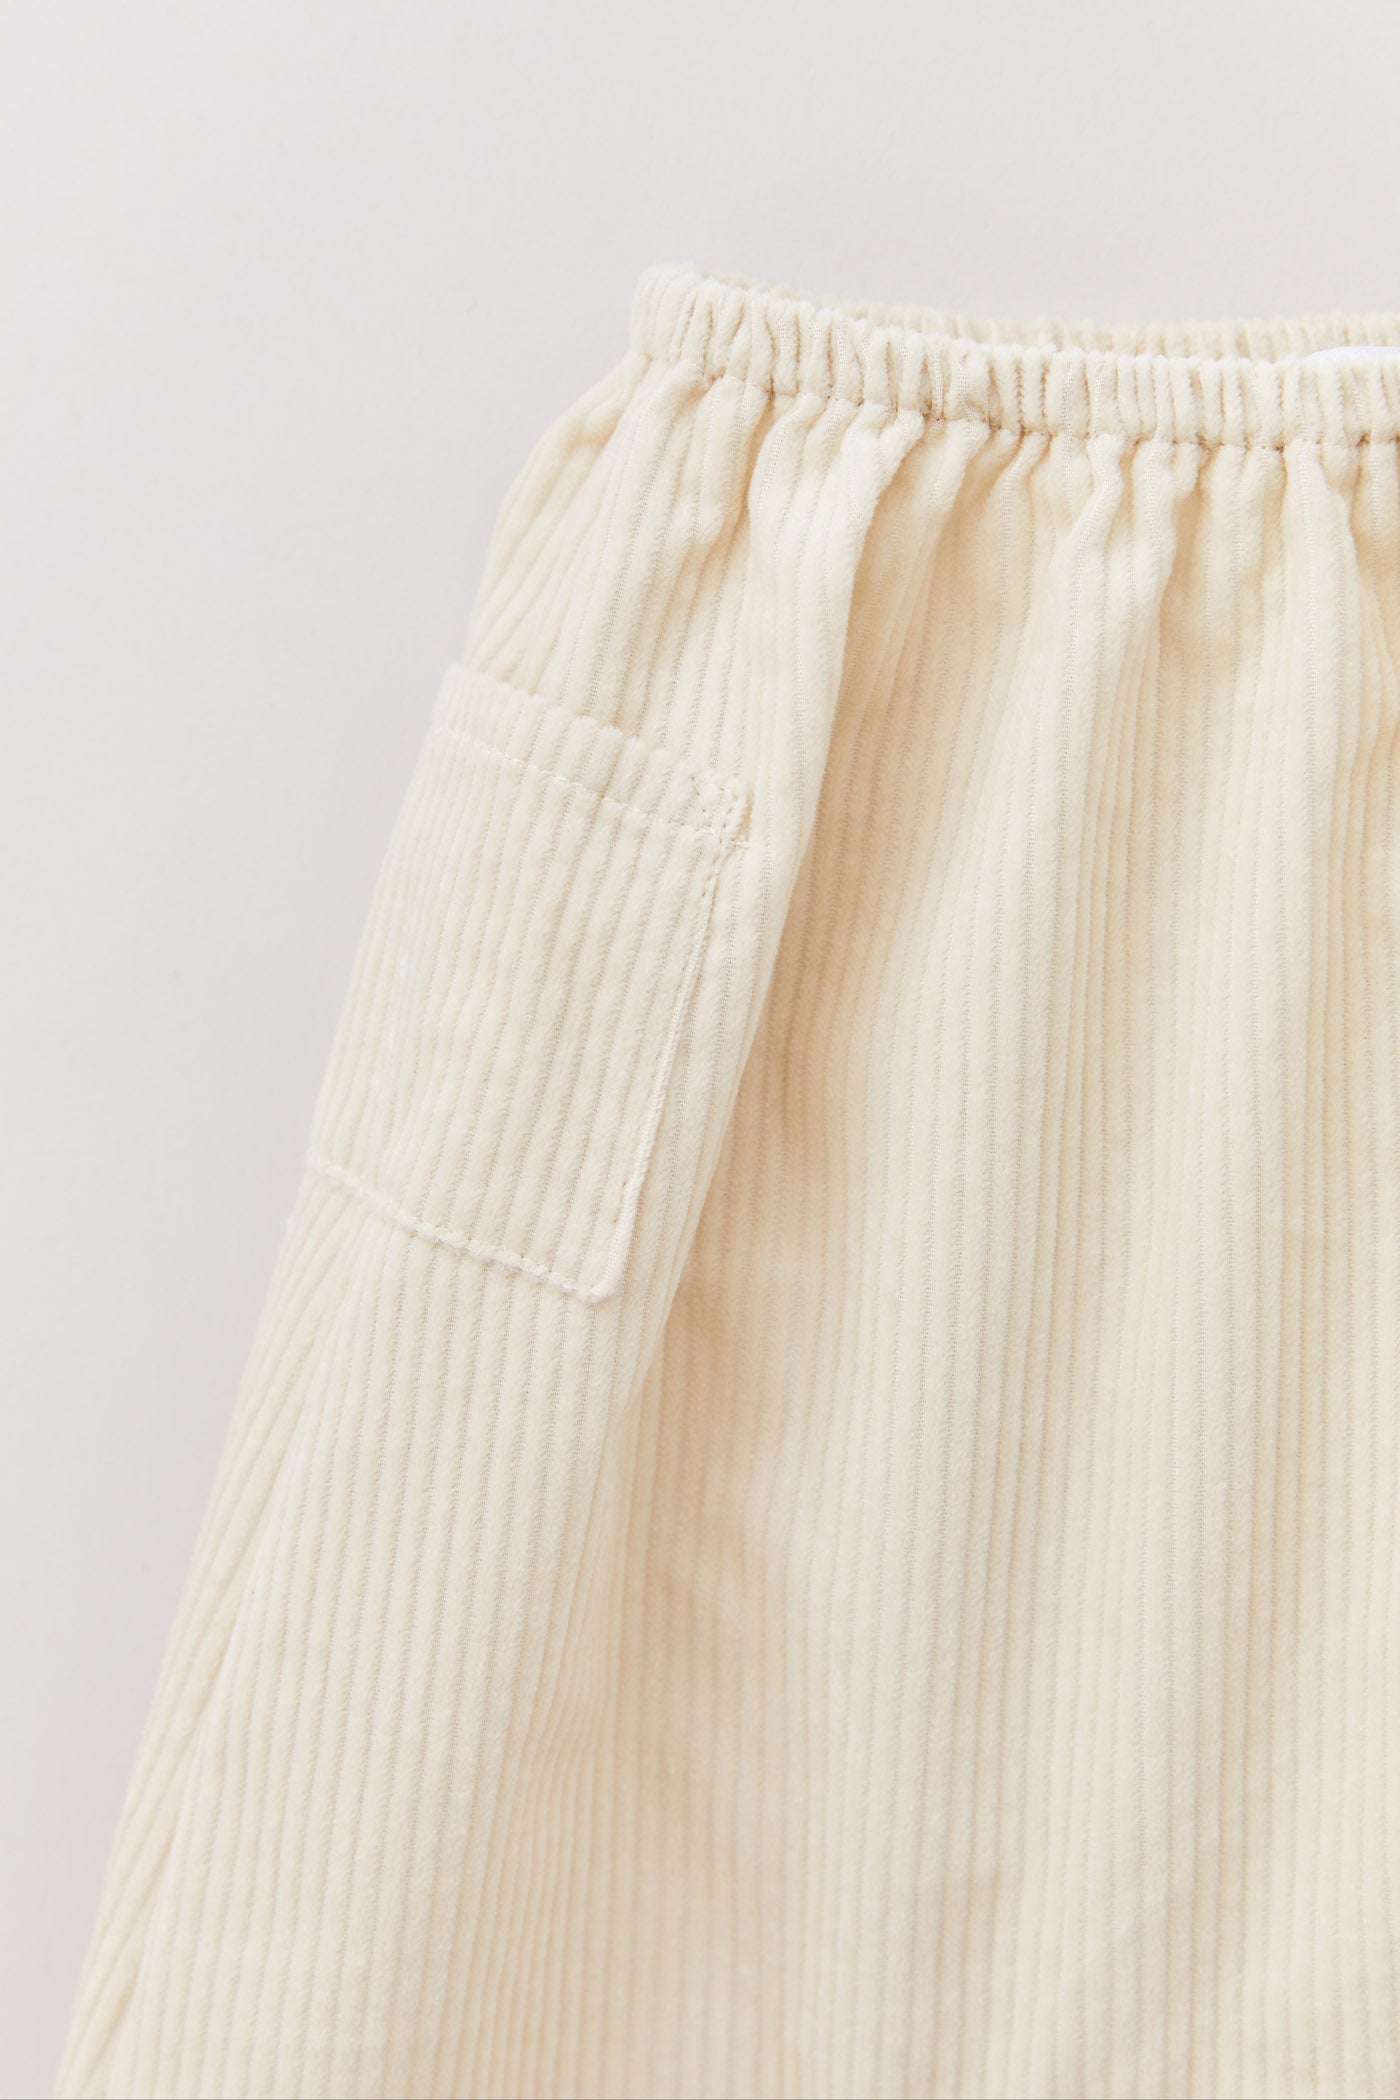 Baby Apple Trousers Cream Corduroy - Designed by Ingrid Lewis - Strawberries & Cream